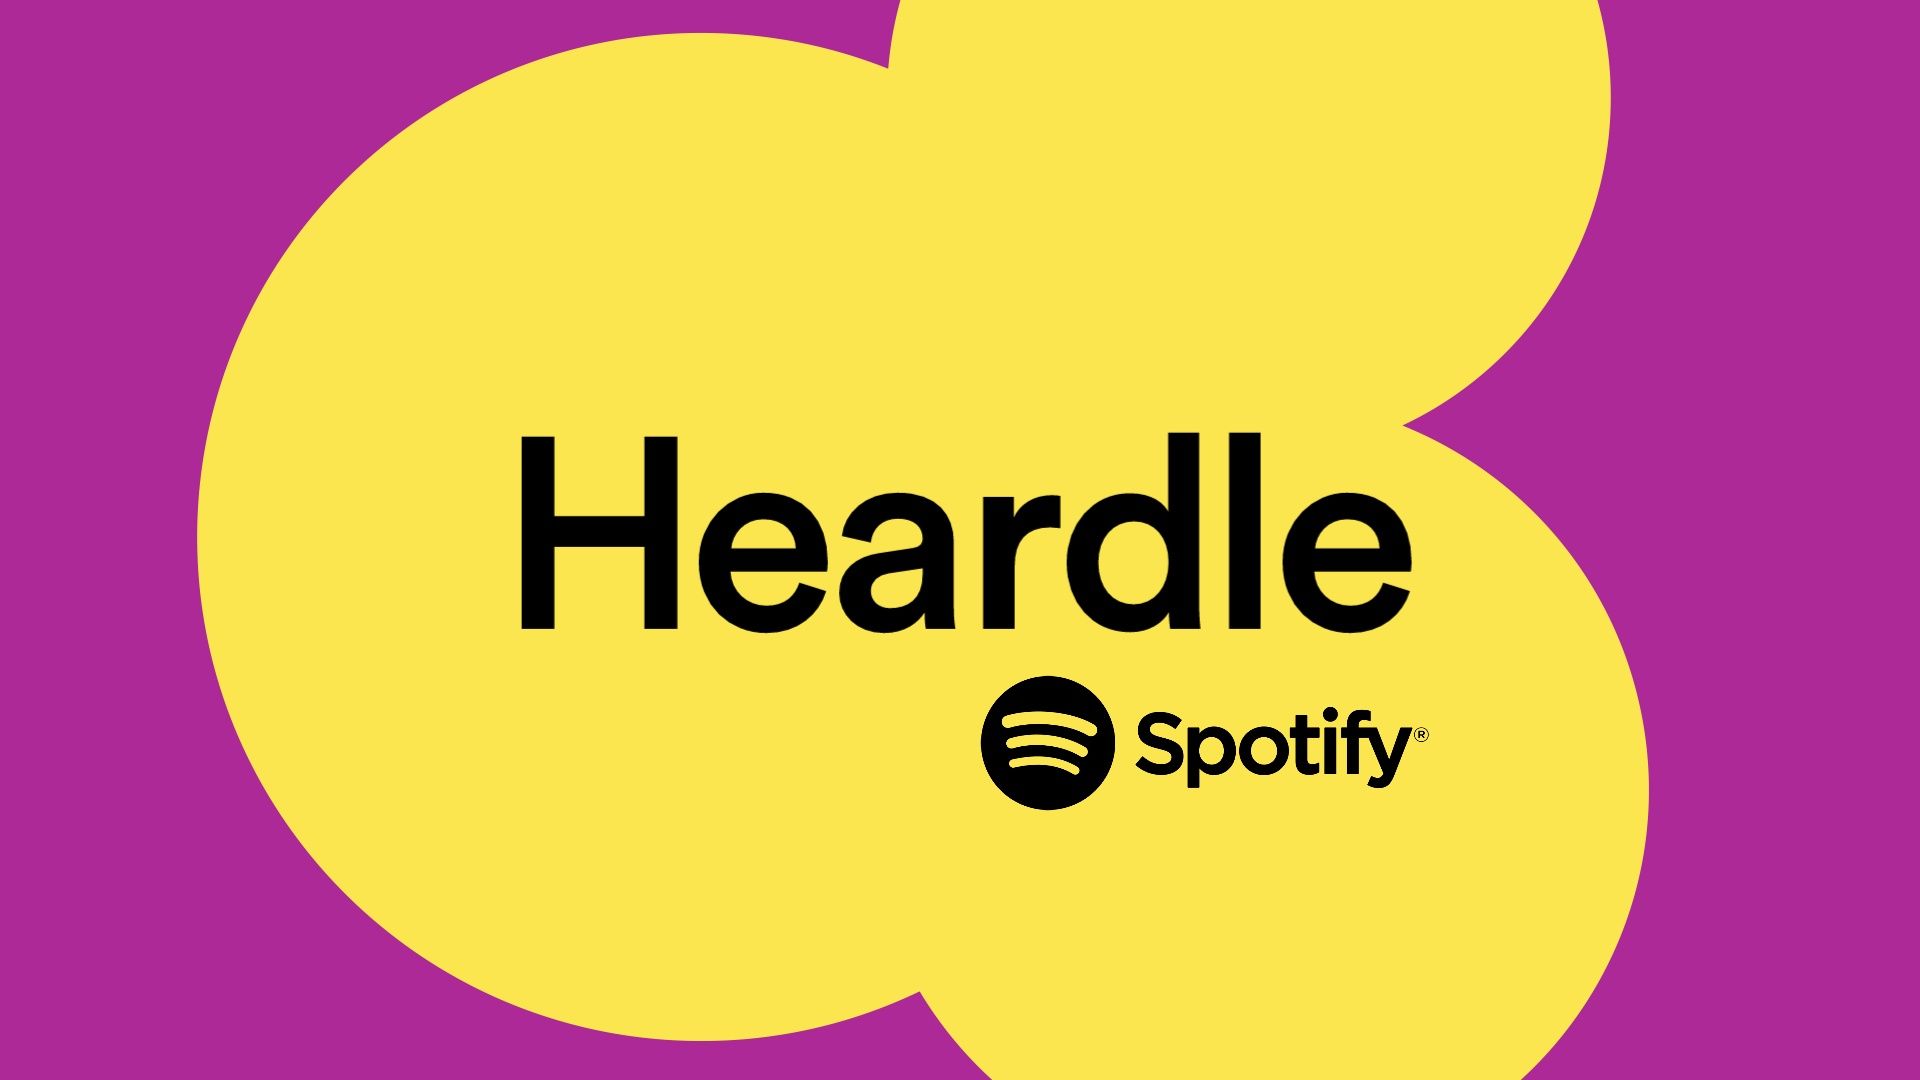 spotify-heardle-hero